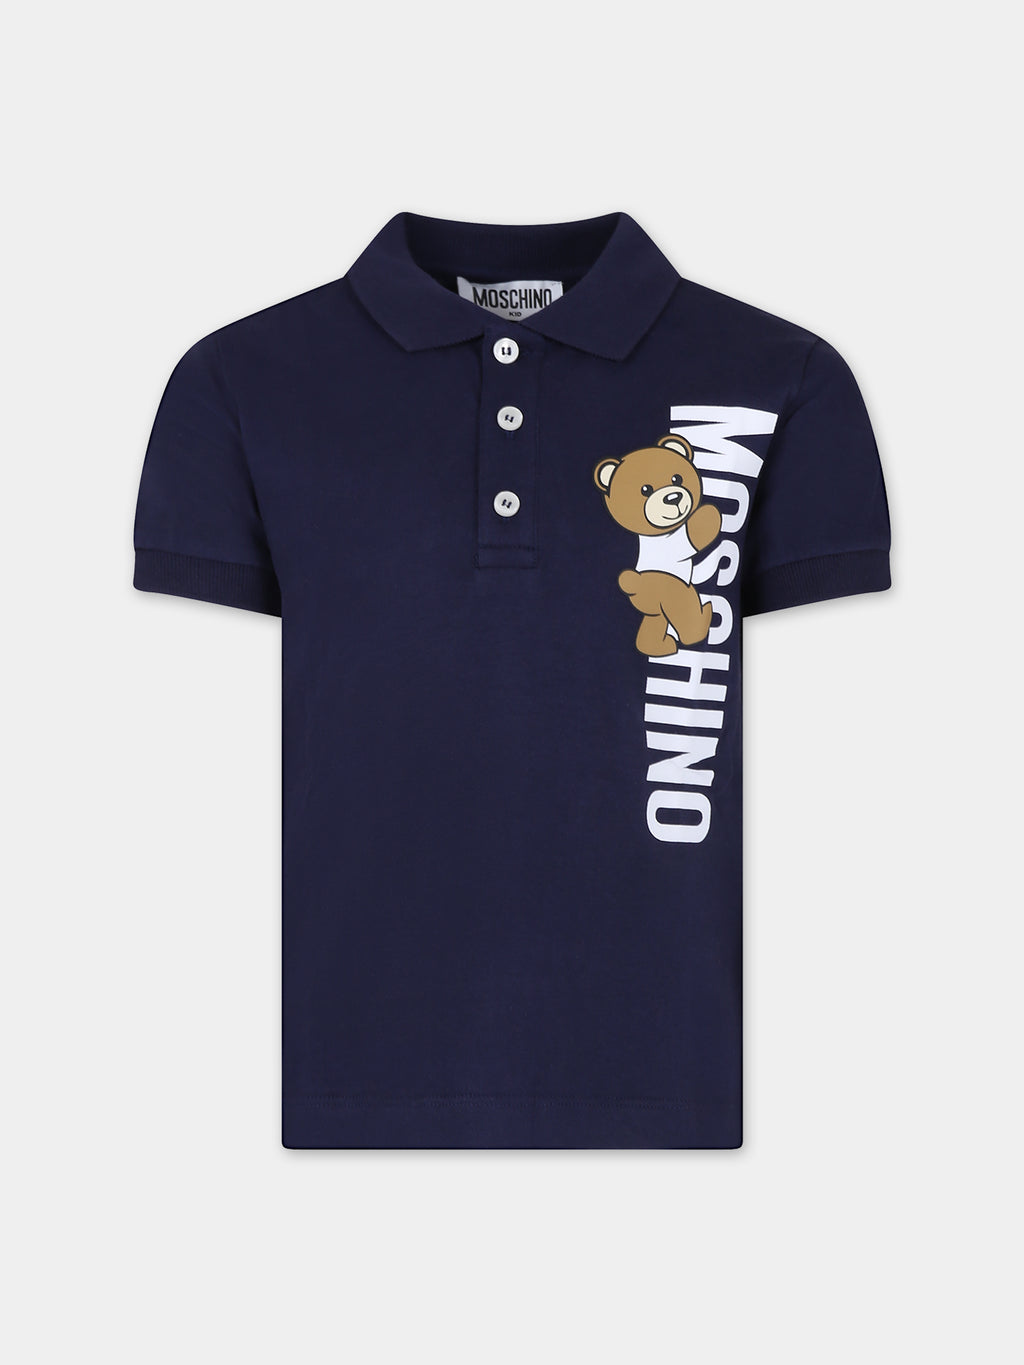 Blue polo shirt for boy with Teddy Bear and logo